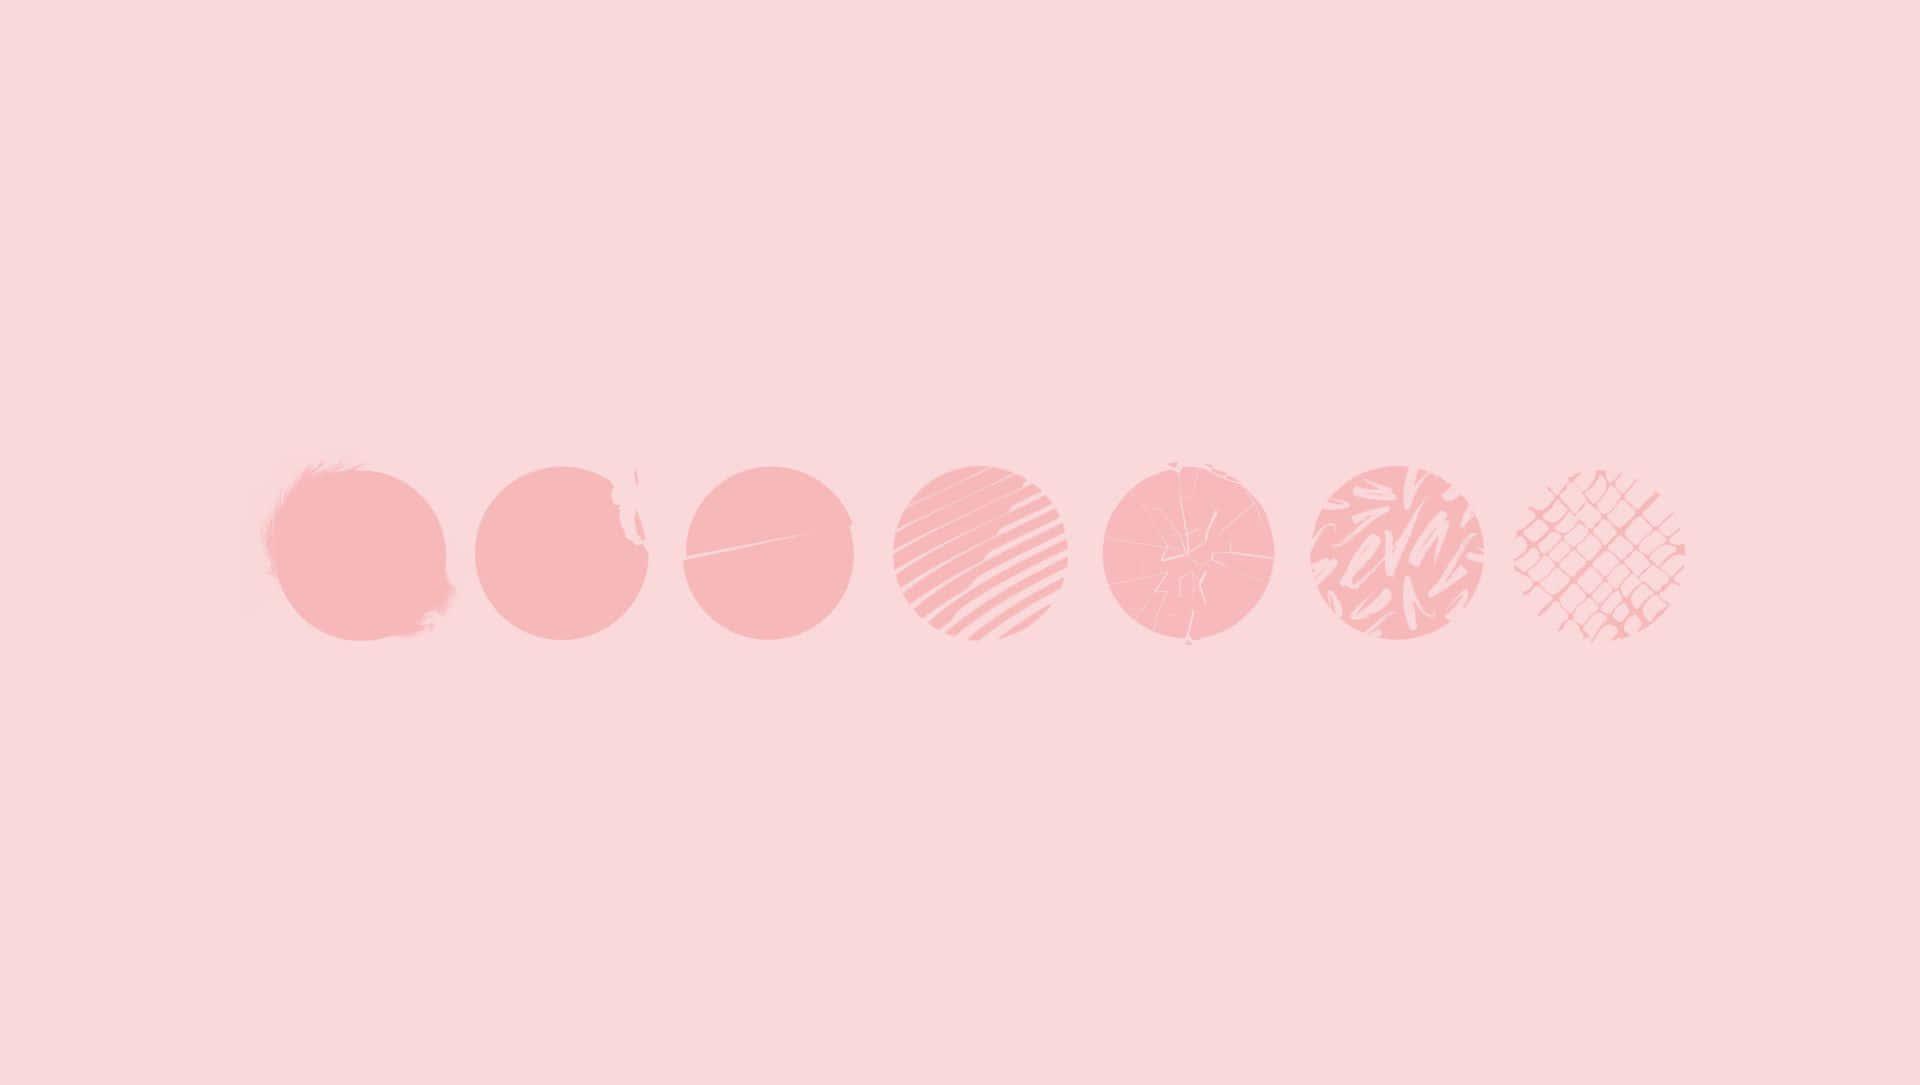 Kawaii Pink Aesthetic Desktop Wallpaper